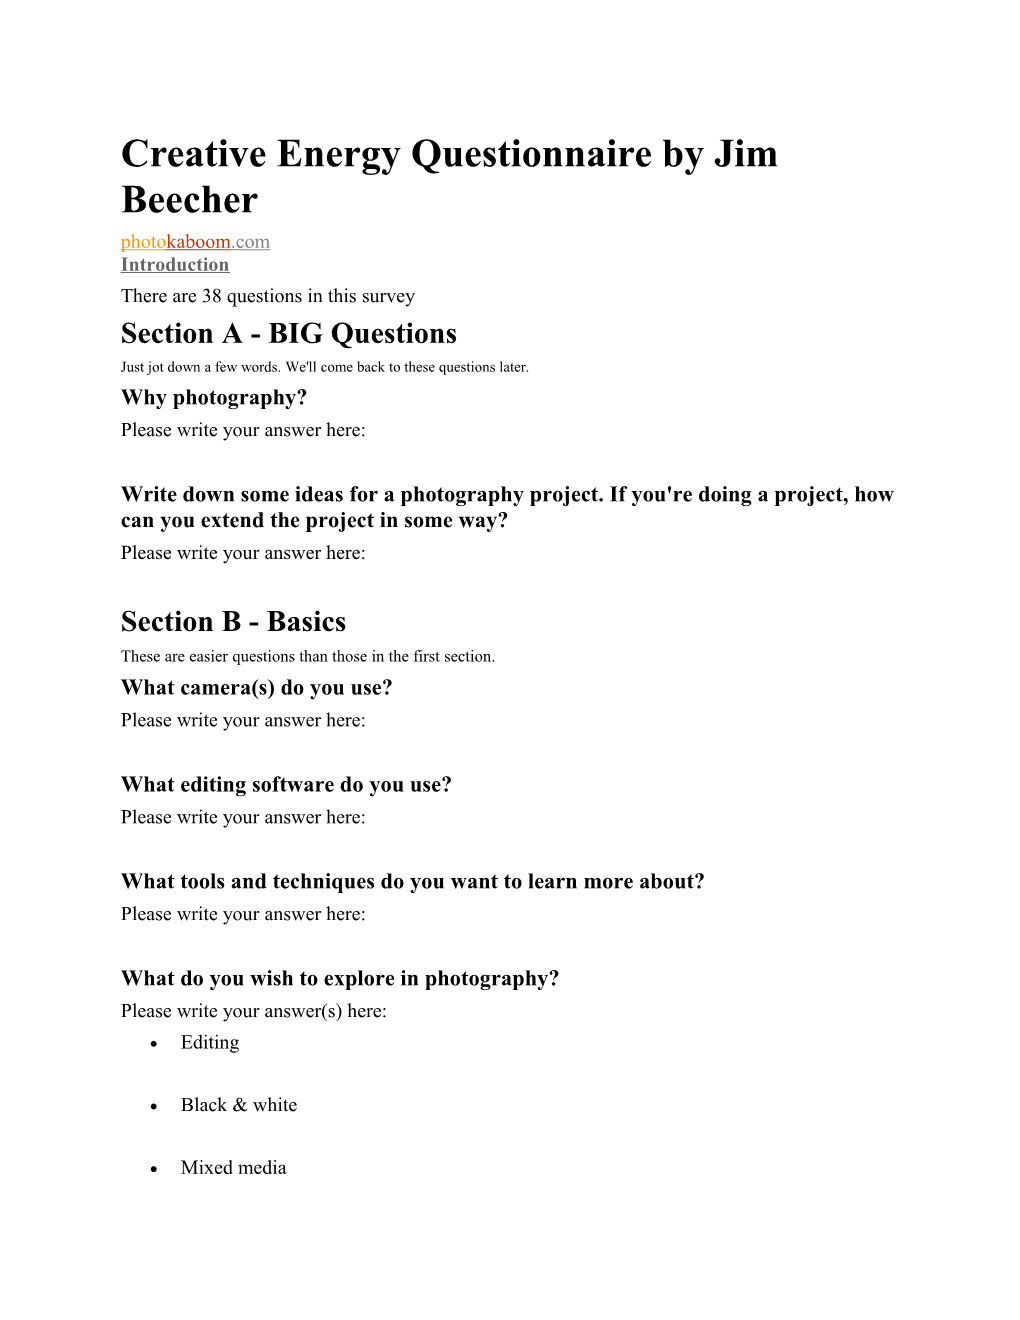 Creative Energy Questionnaire by Jim Beecher